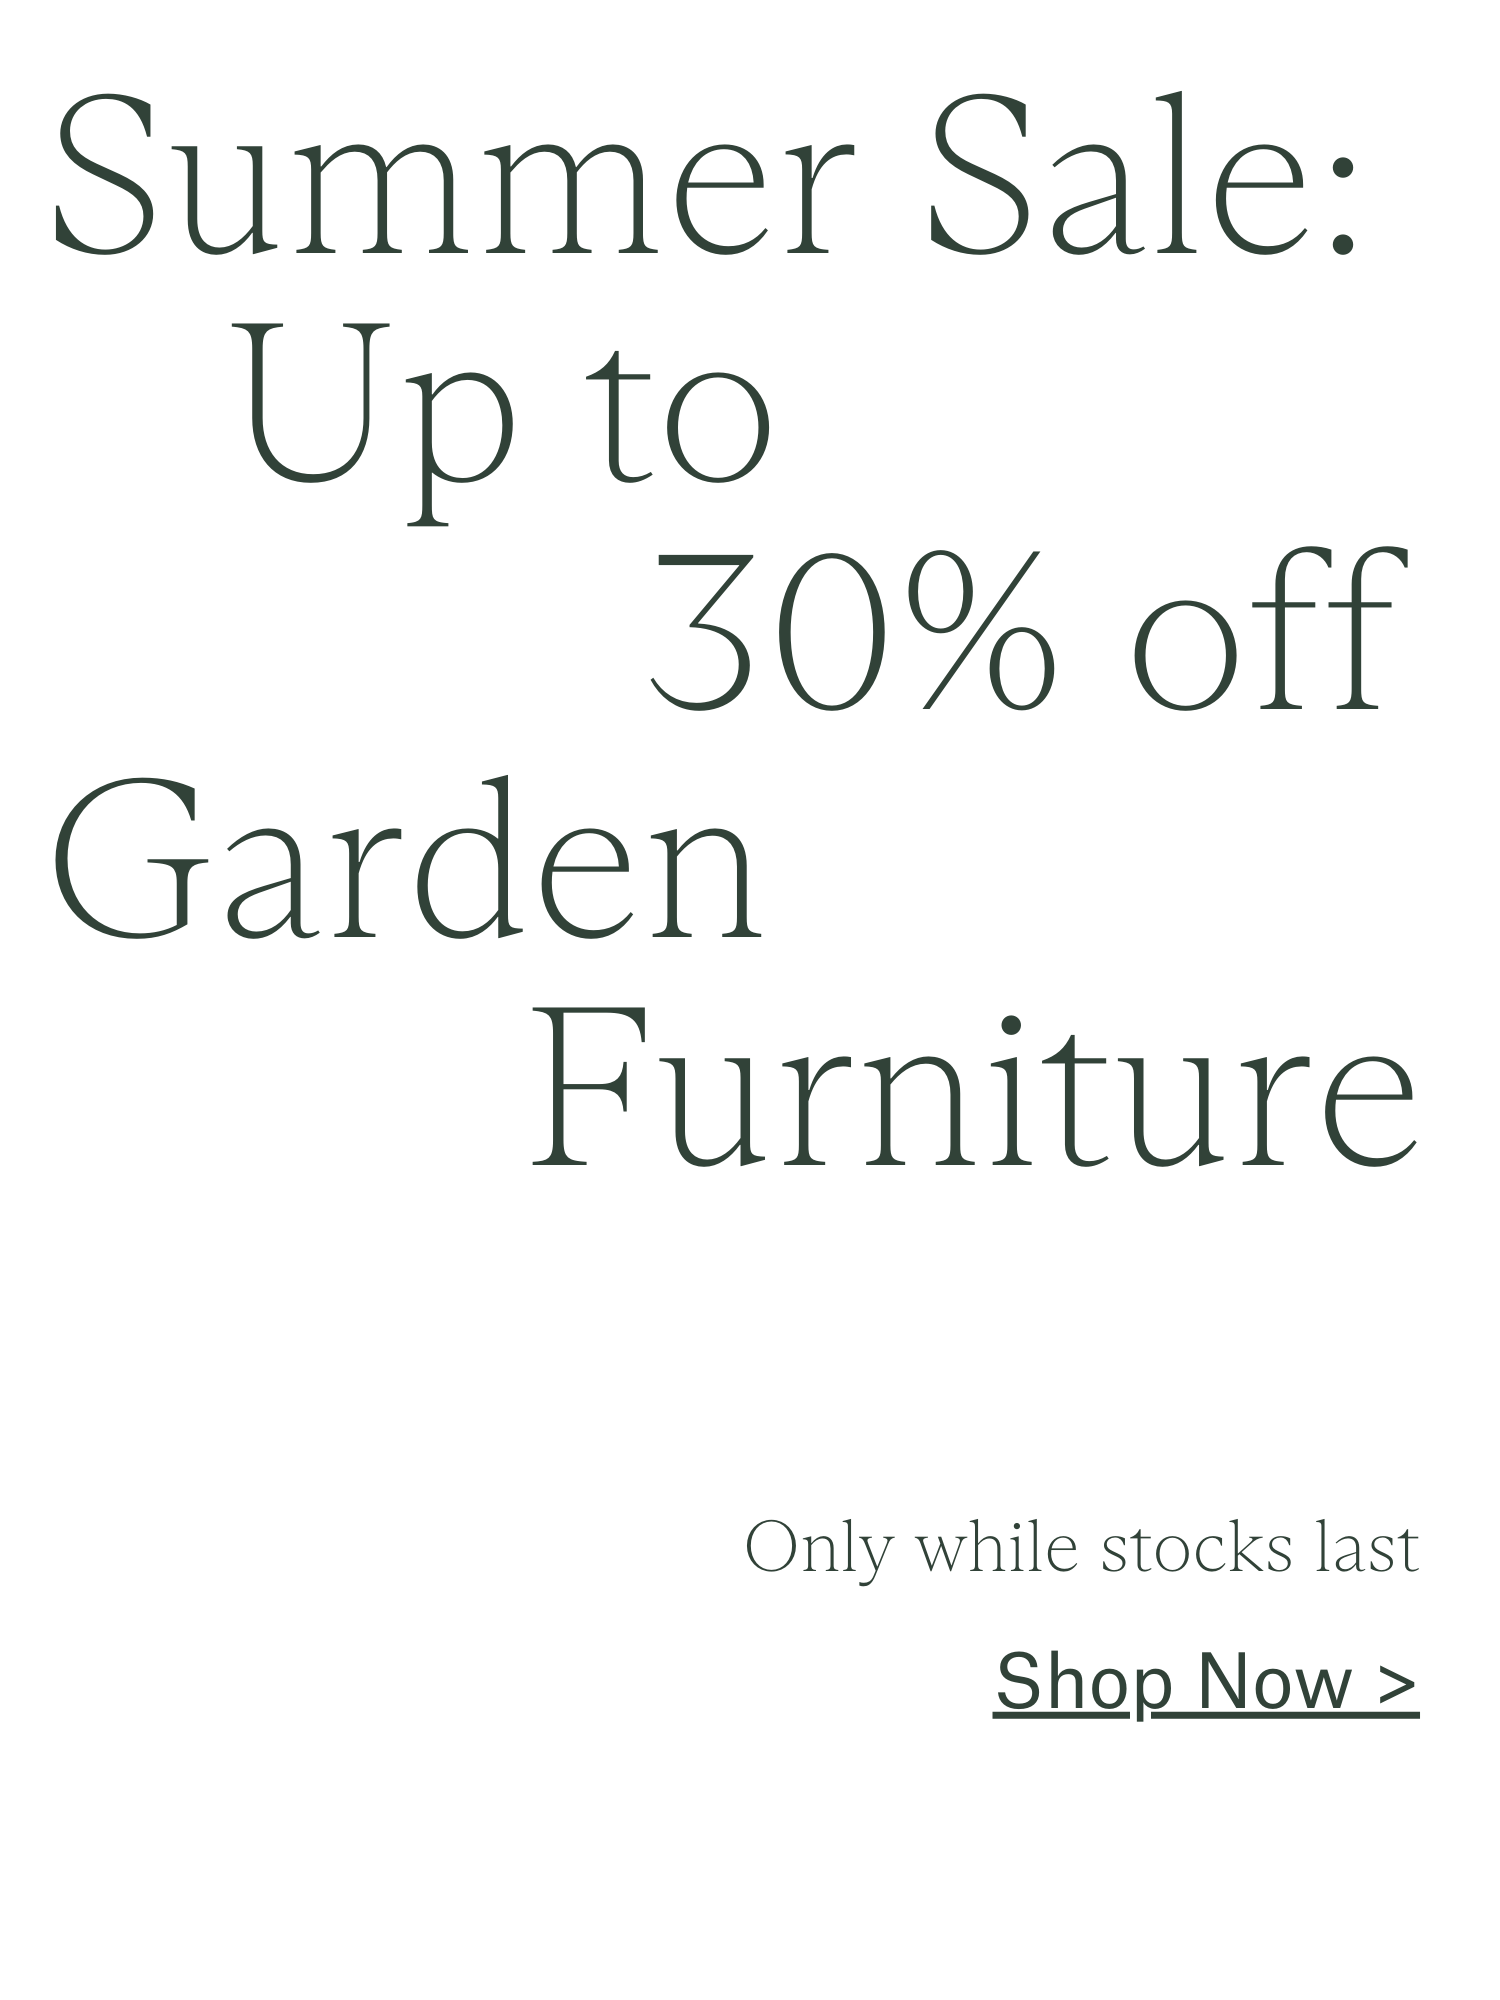 Summer Sale: Up to 30% off Garden Furniture.